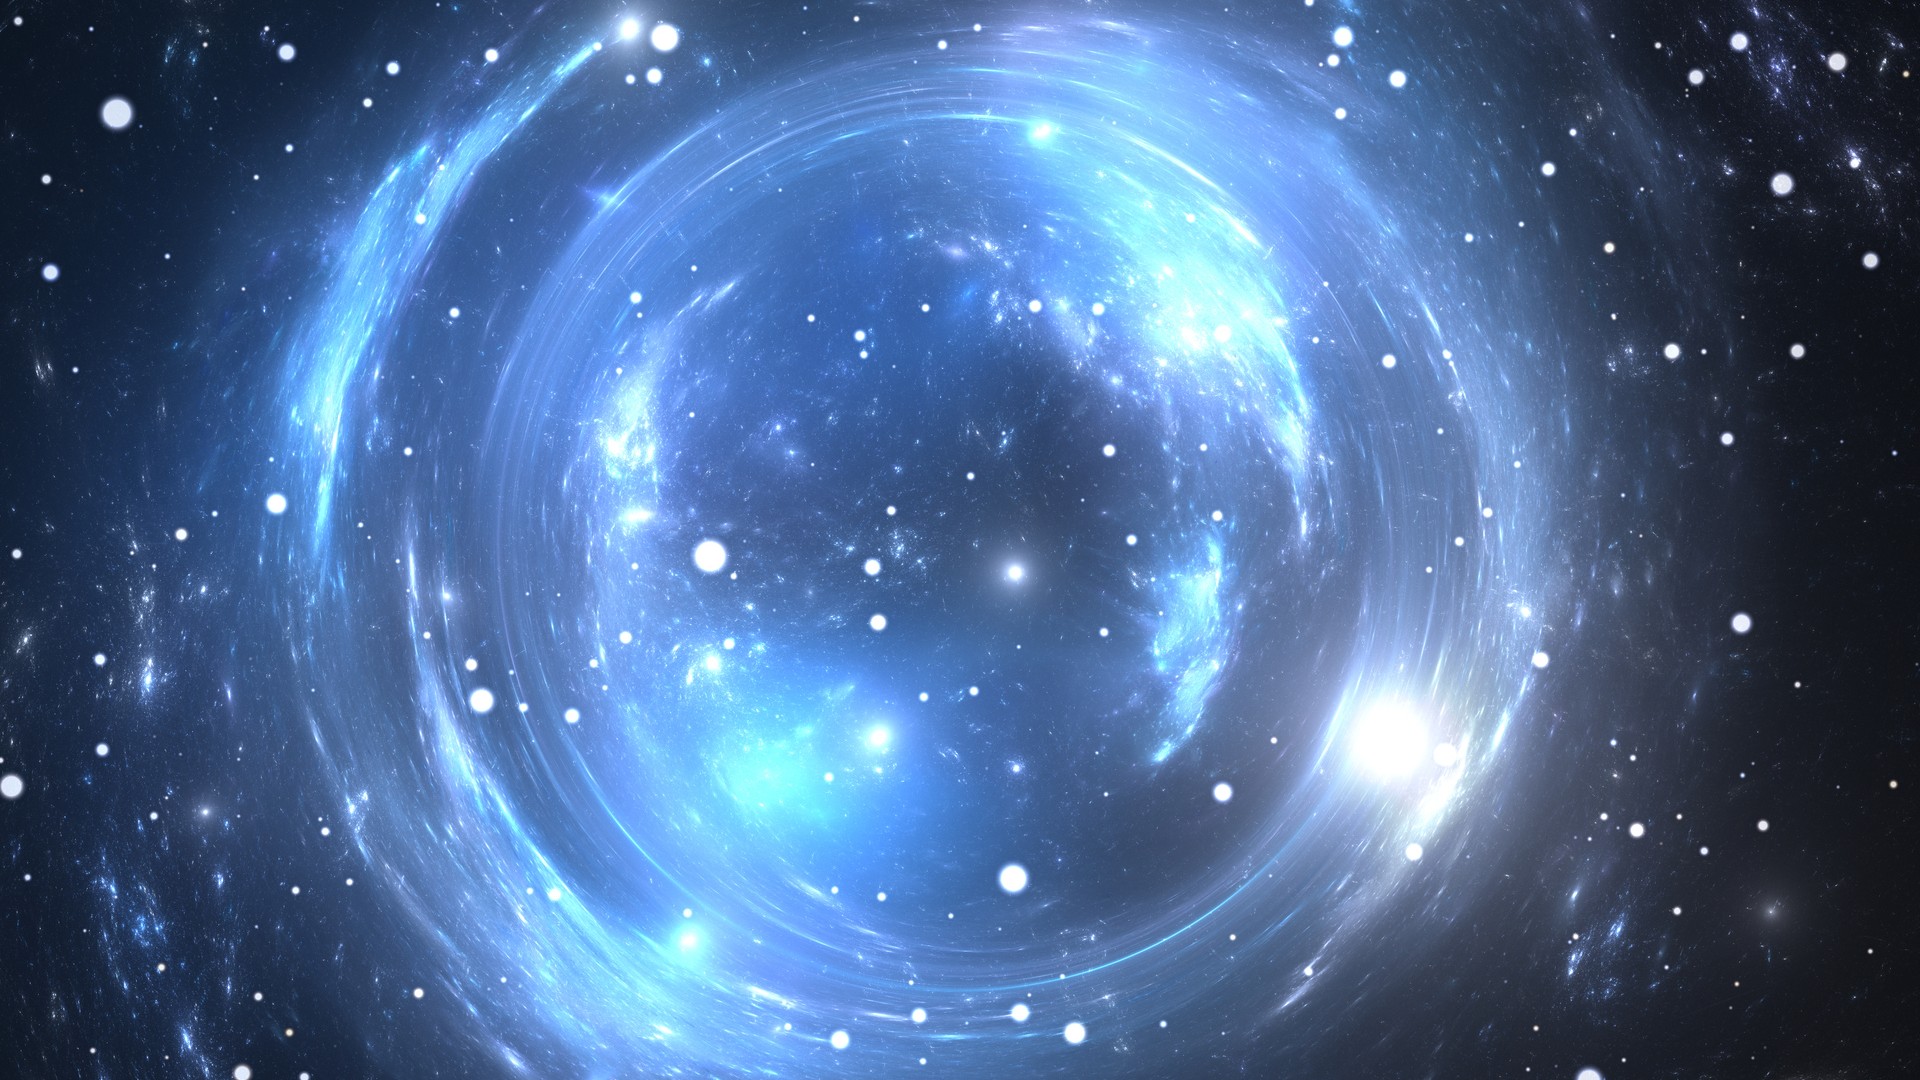 Cosmic magnifying glass' reveals super-rare warped supernova